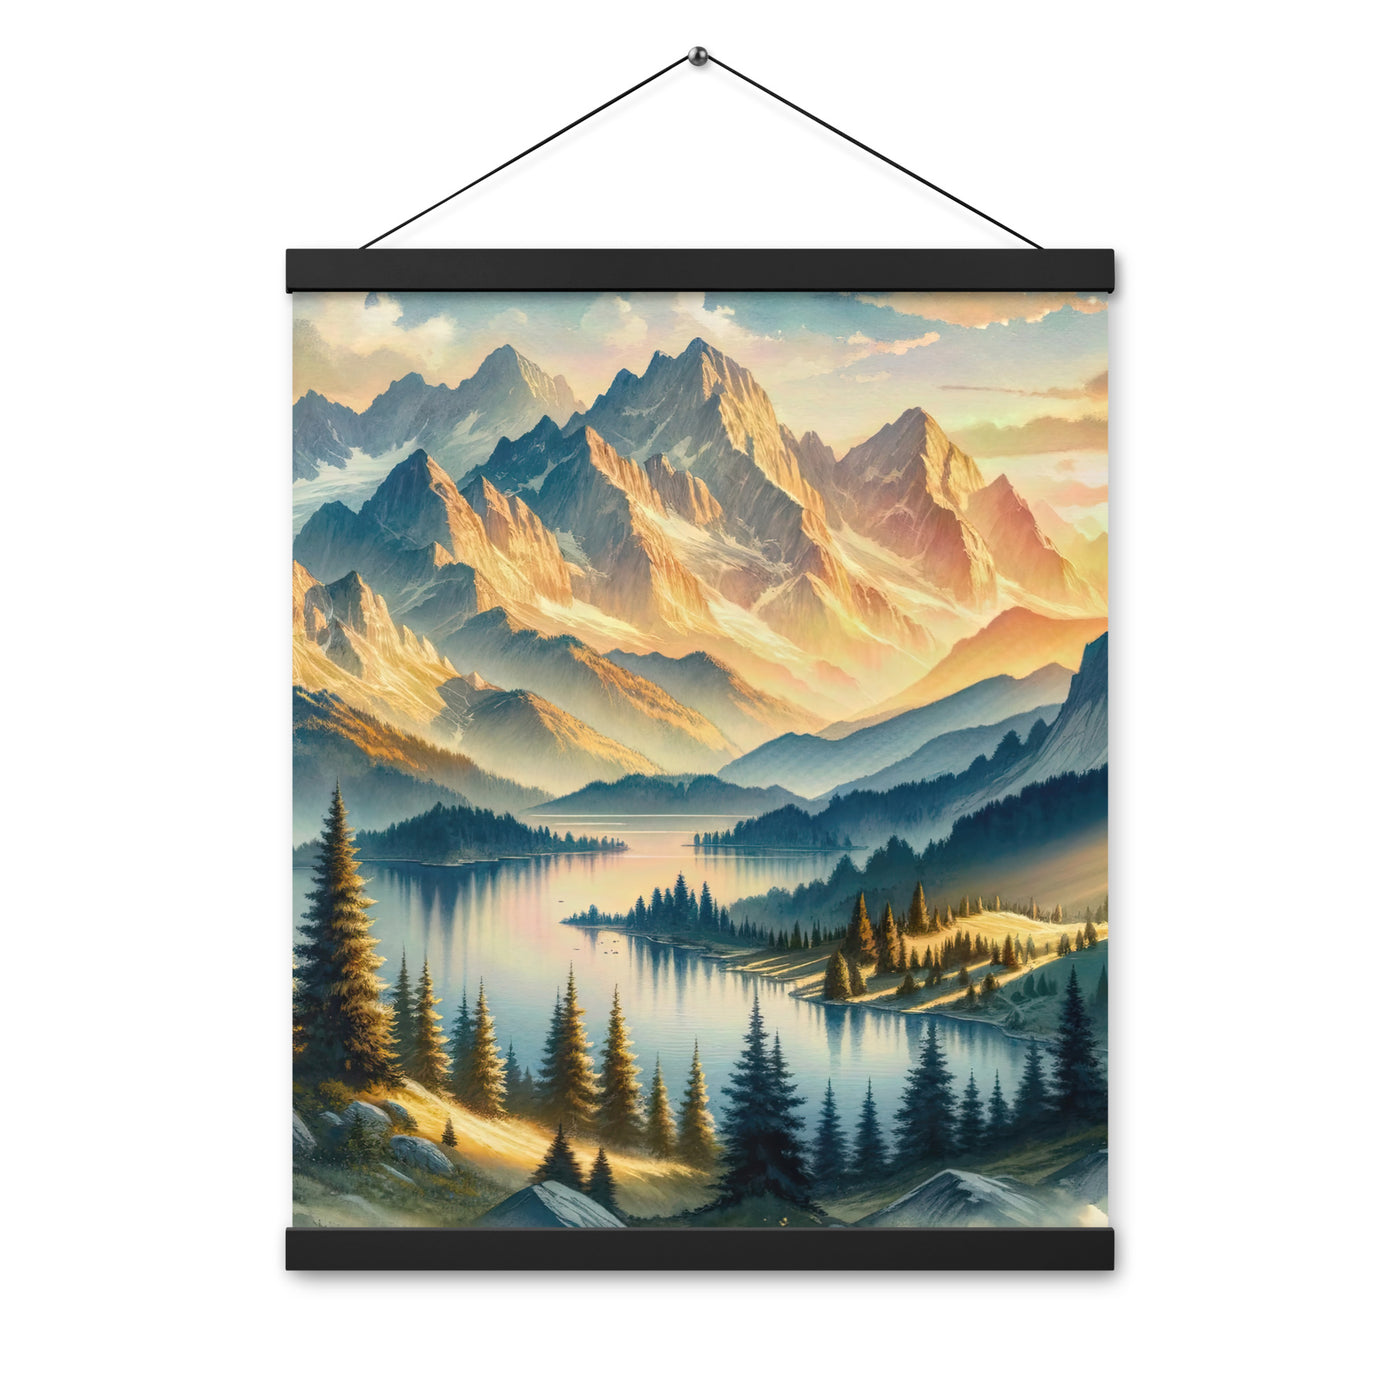 Aquarell der Alpenpracht bei Sonnenuntergang, Berge im goldenen Licht - Premium Poster mit Aufhängung berge xxx yyy zzz 40.6 x 50.8 cm